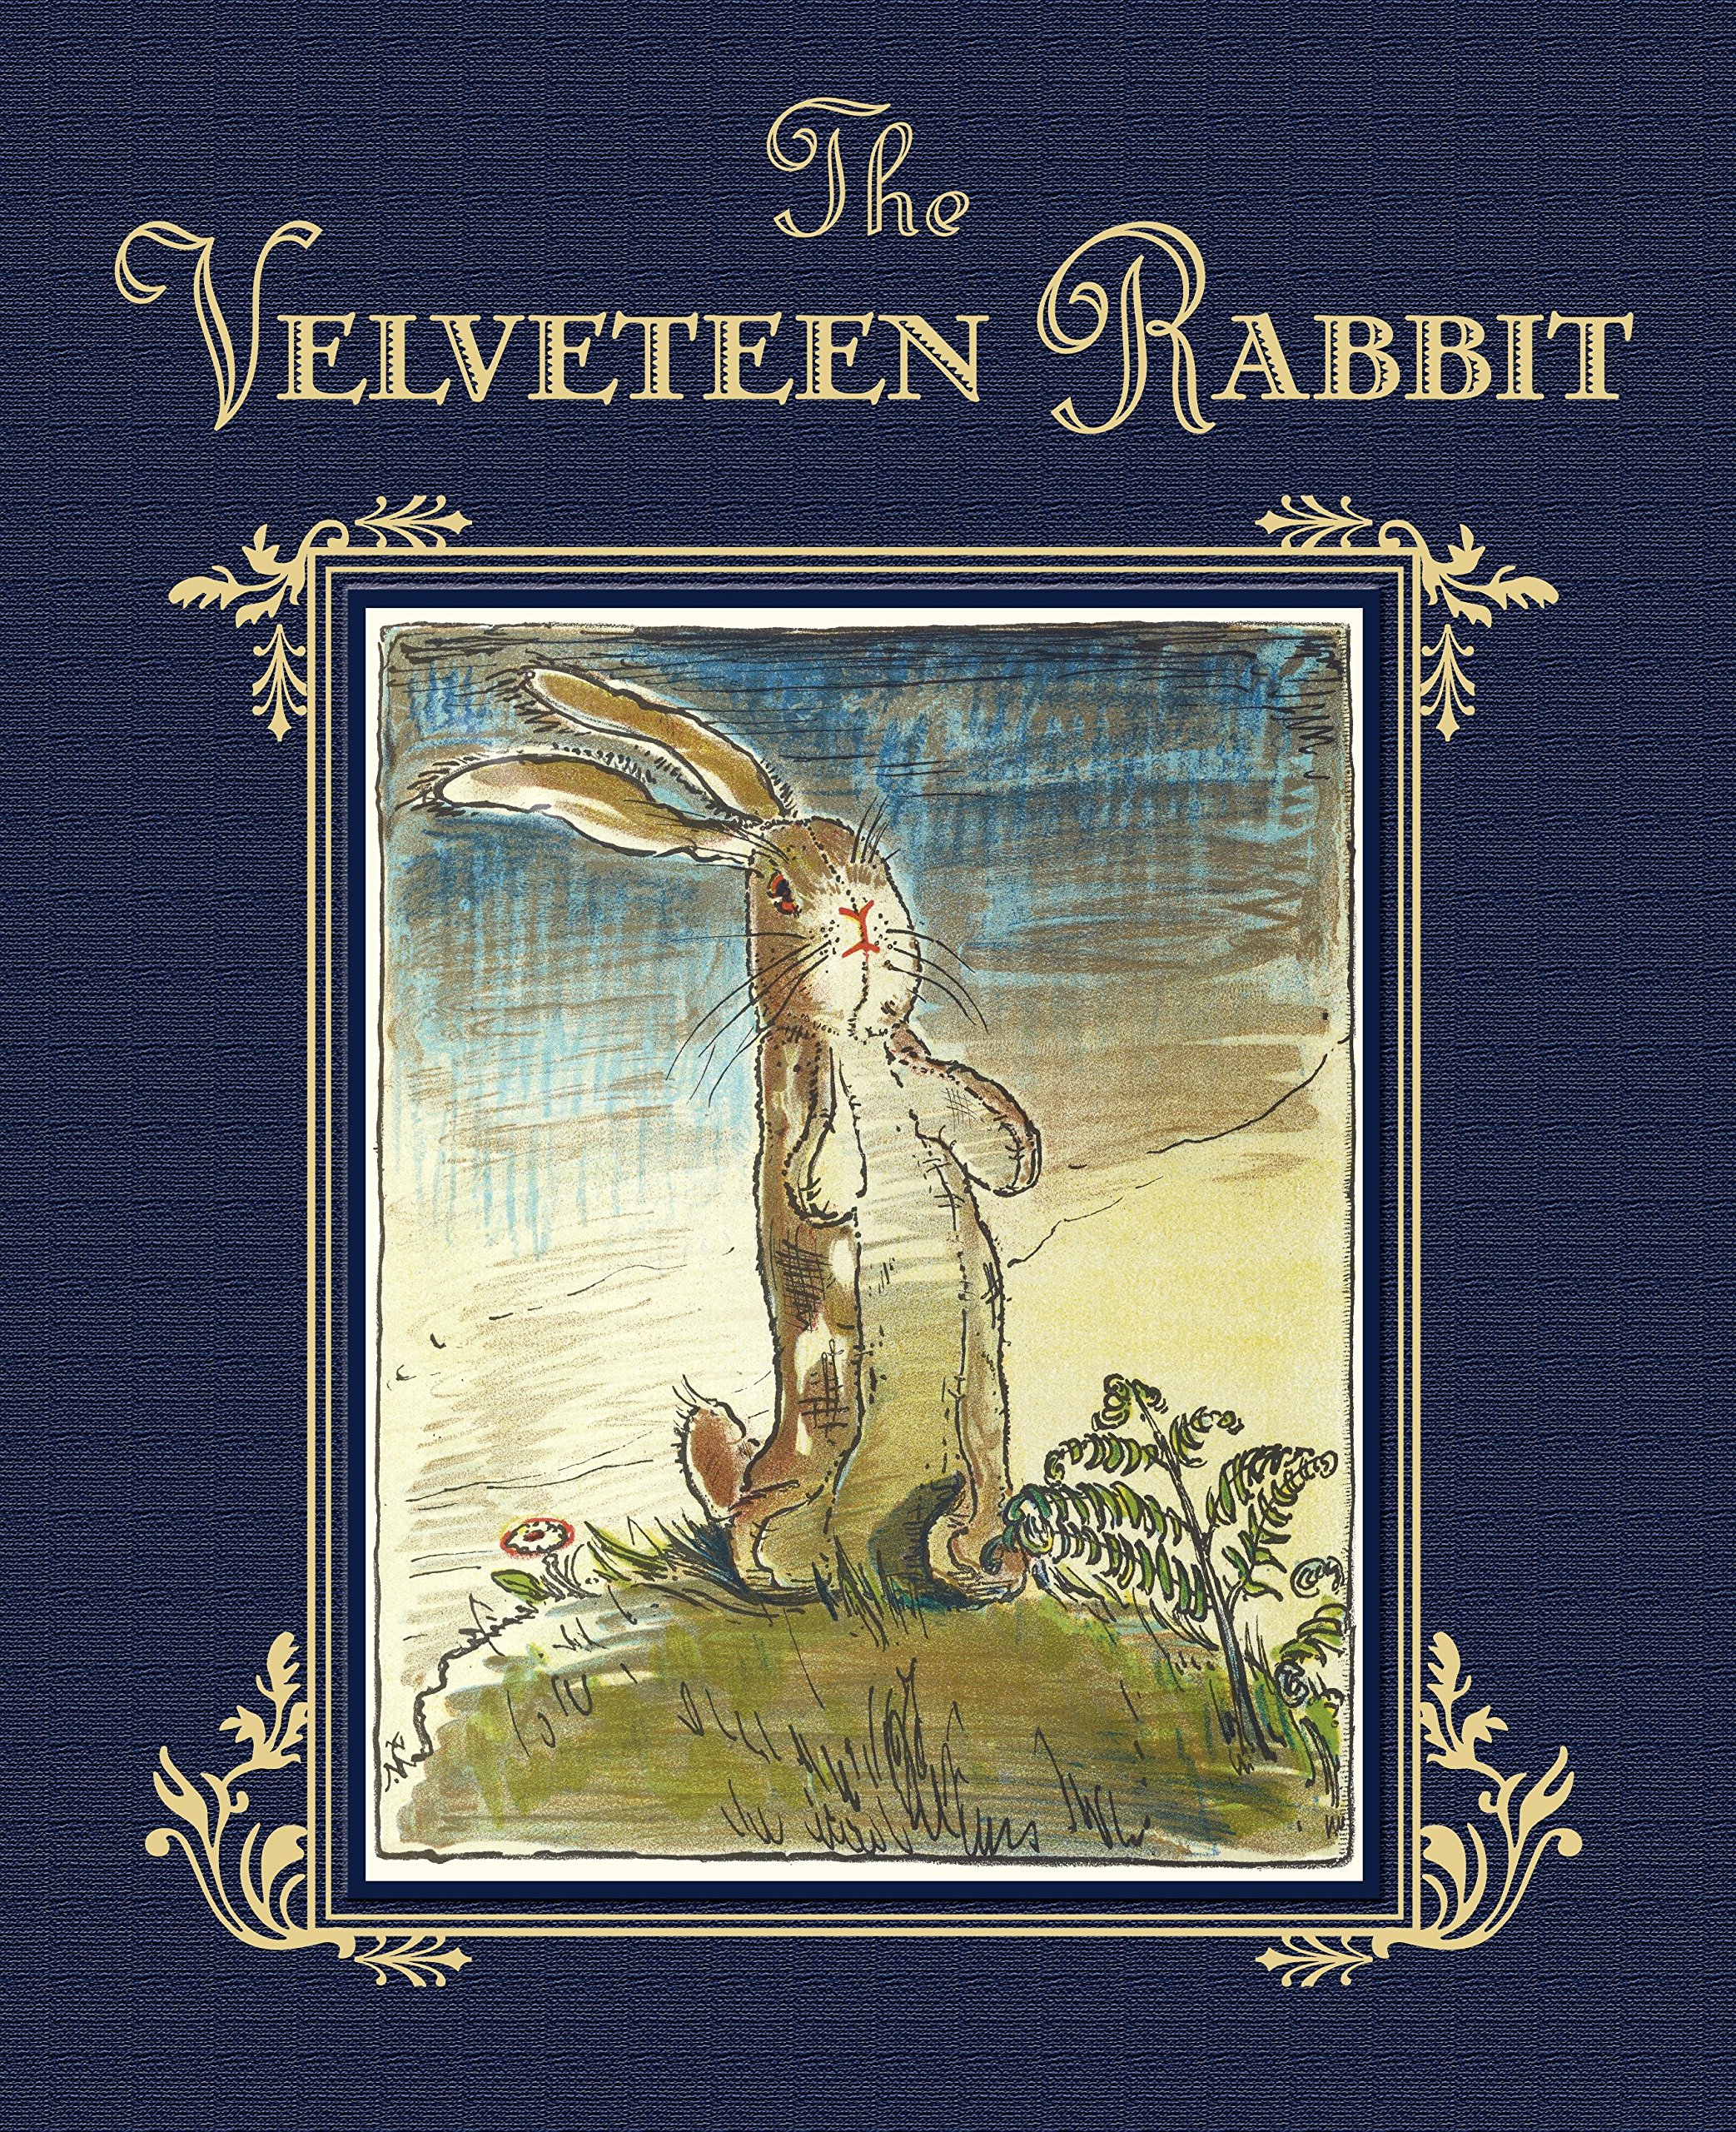 The Velveteen Rabbit 2nd Grade Review by Kamala